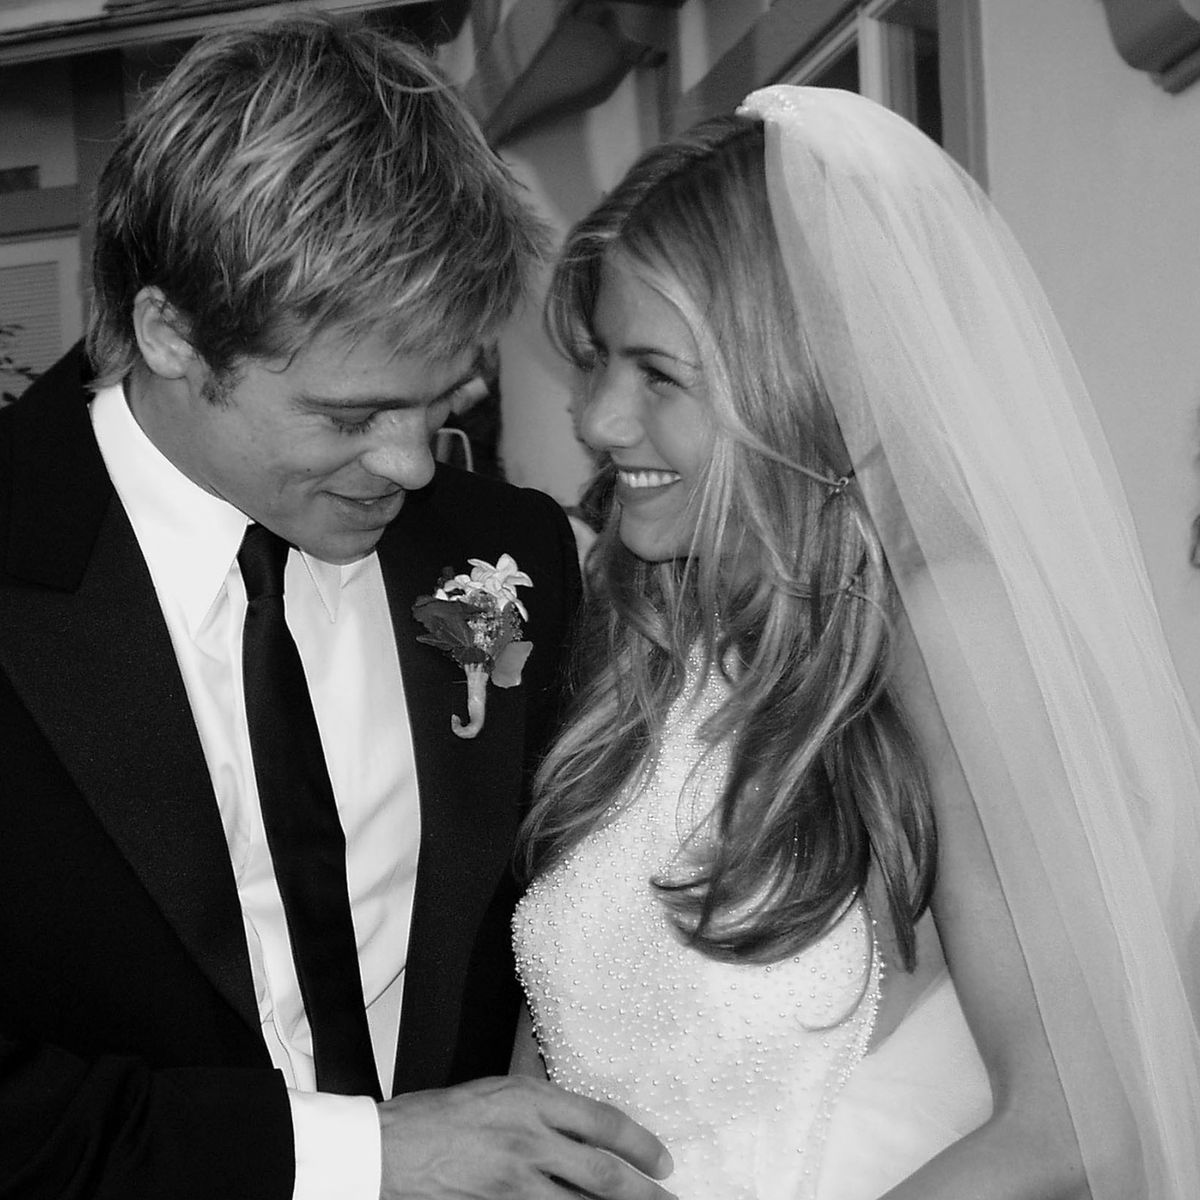 Jennifer Aniston with her ex-husband Brad Pitt in their wedding dress